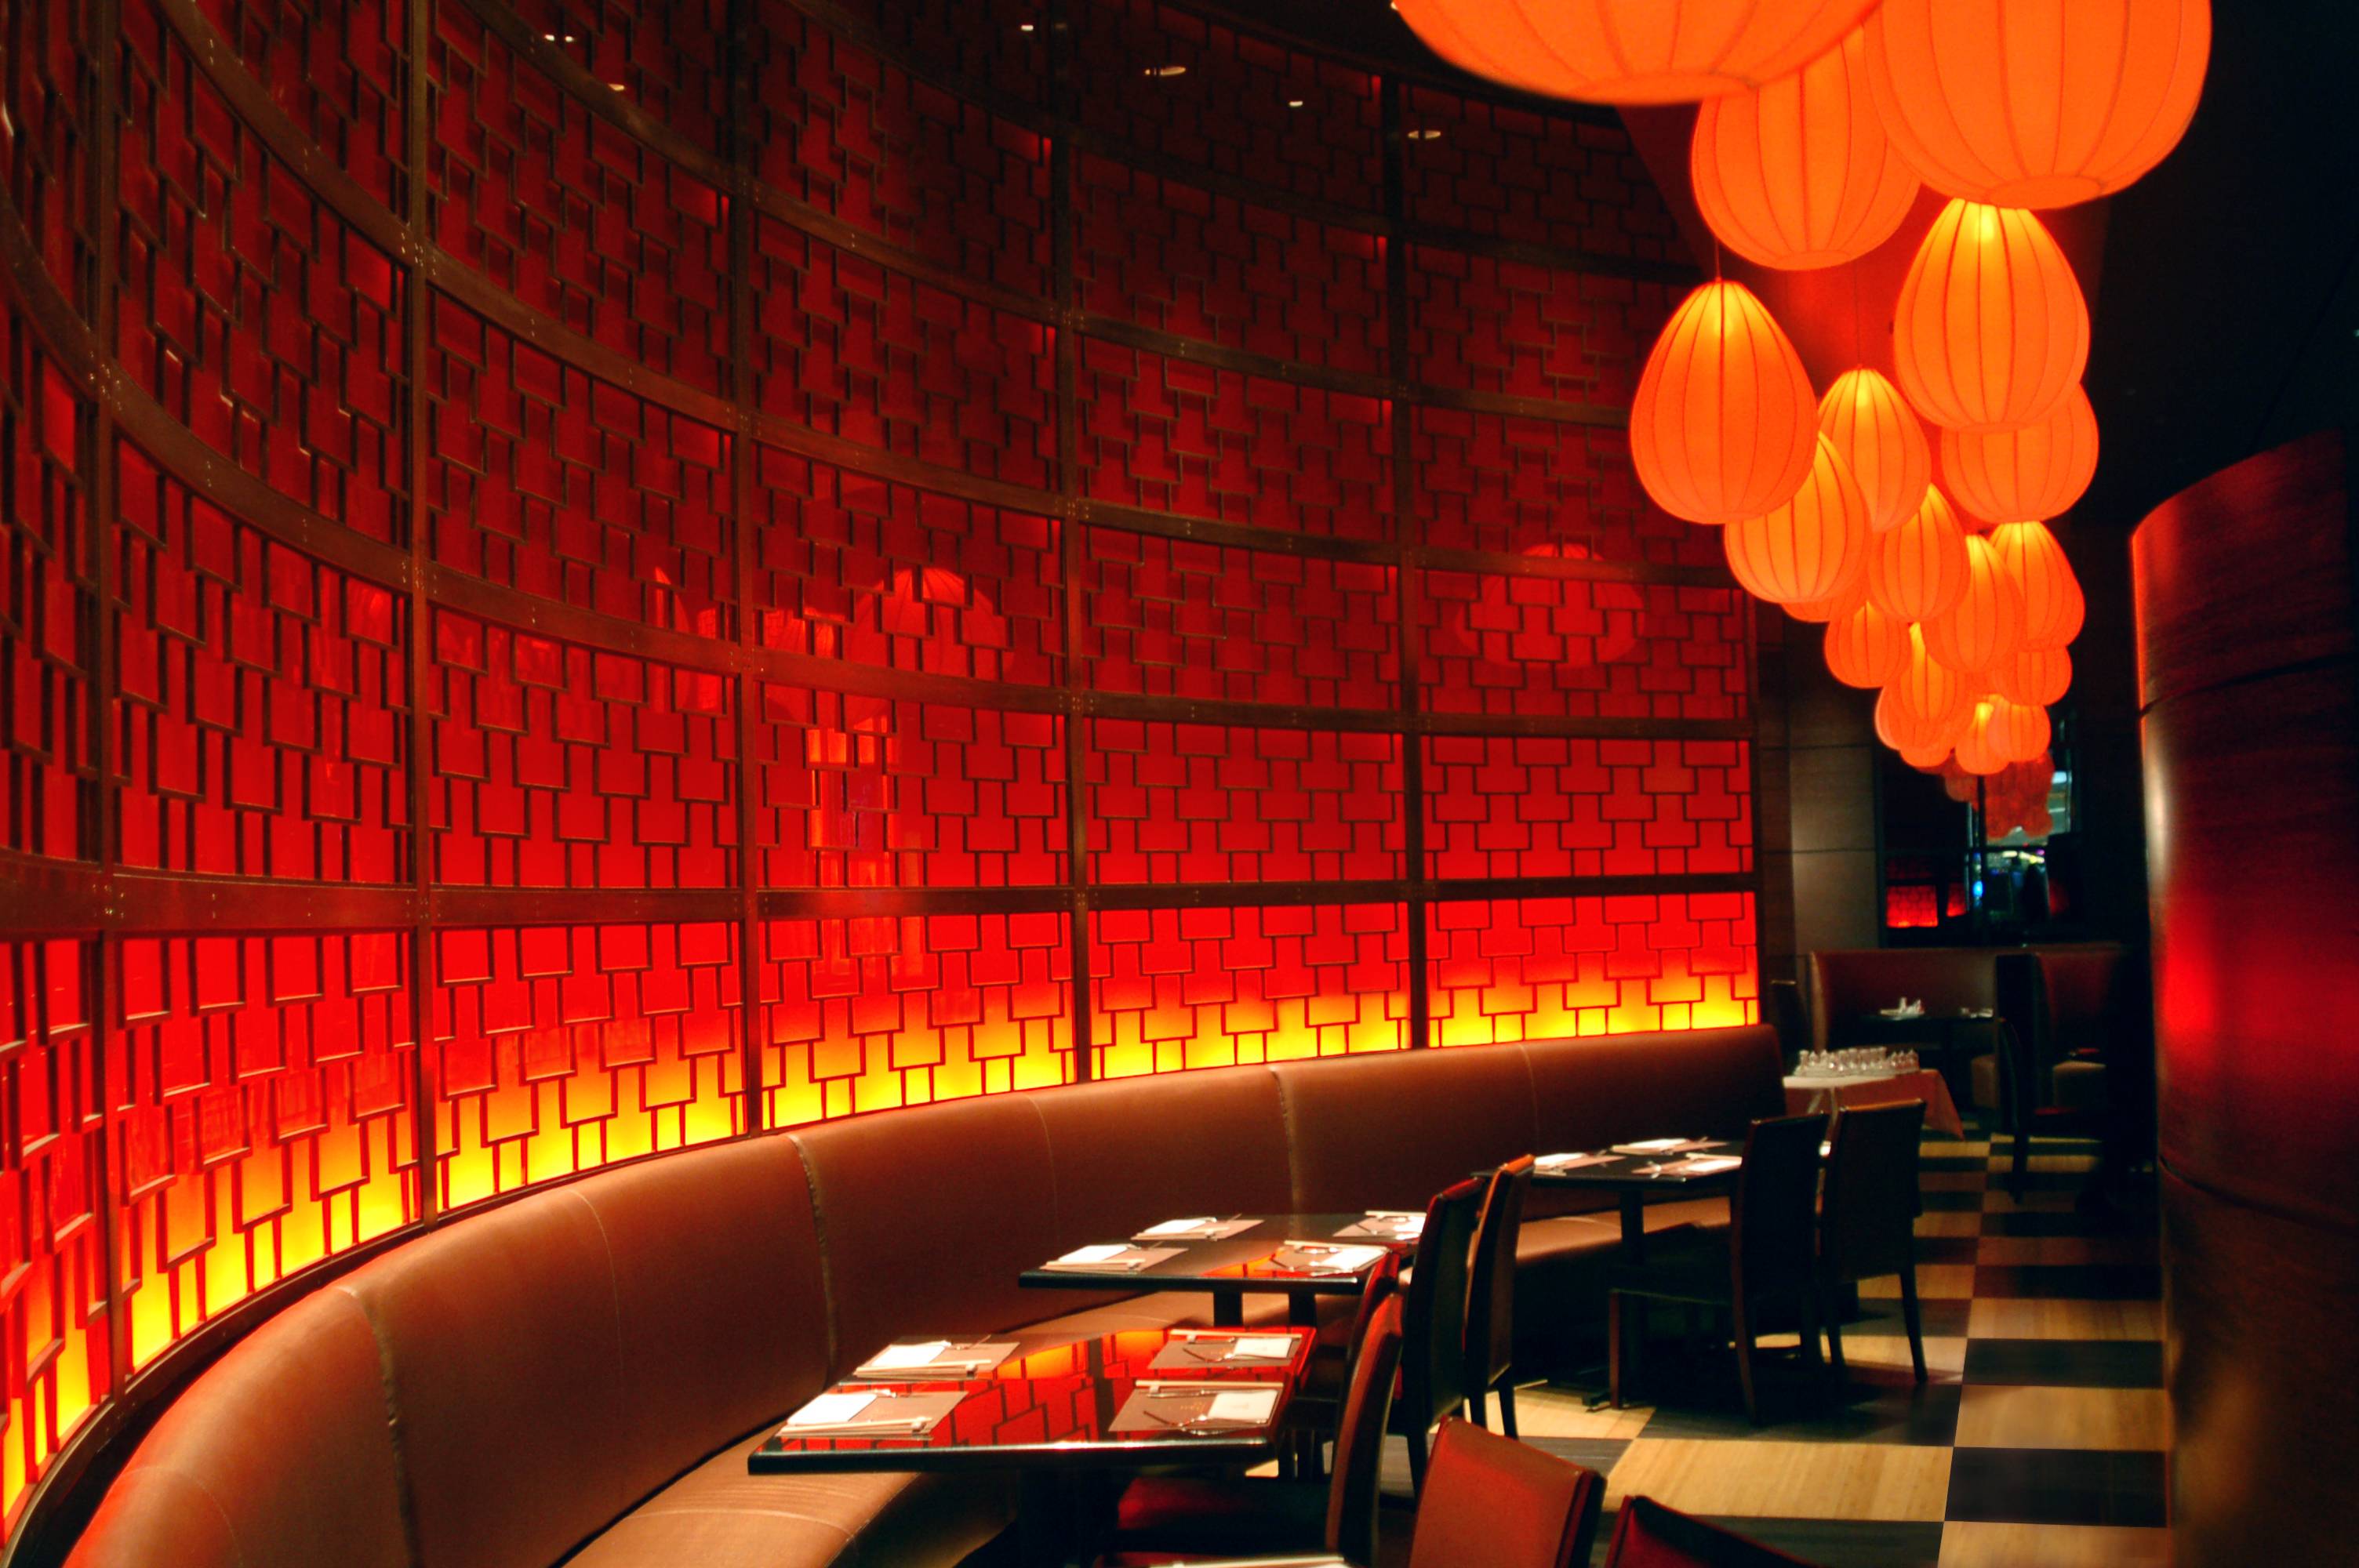 The Top 5 Chinese Restaurants in Las Vegas - Haute Living